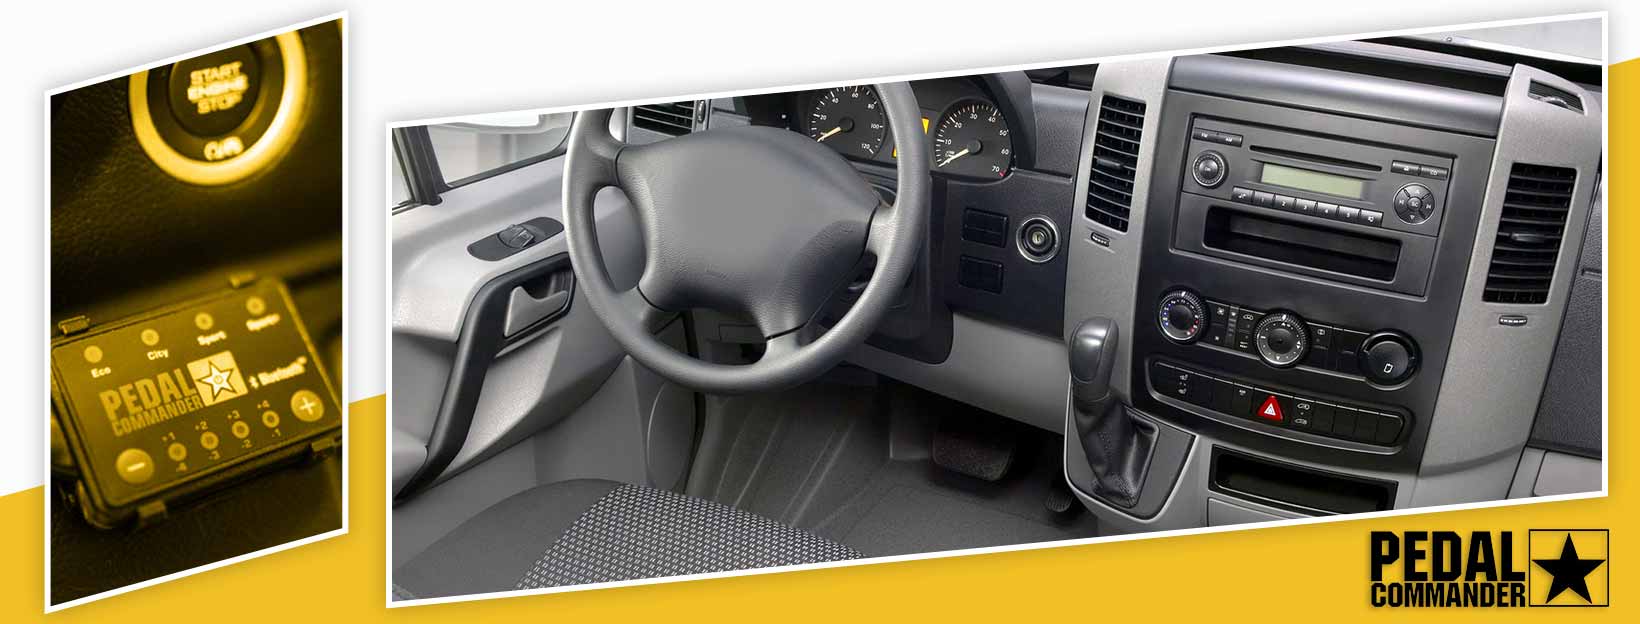 Pedal Commander for Dodge Sprinter - interior